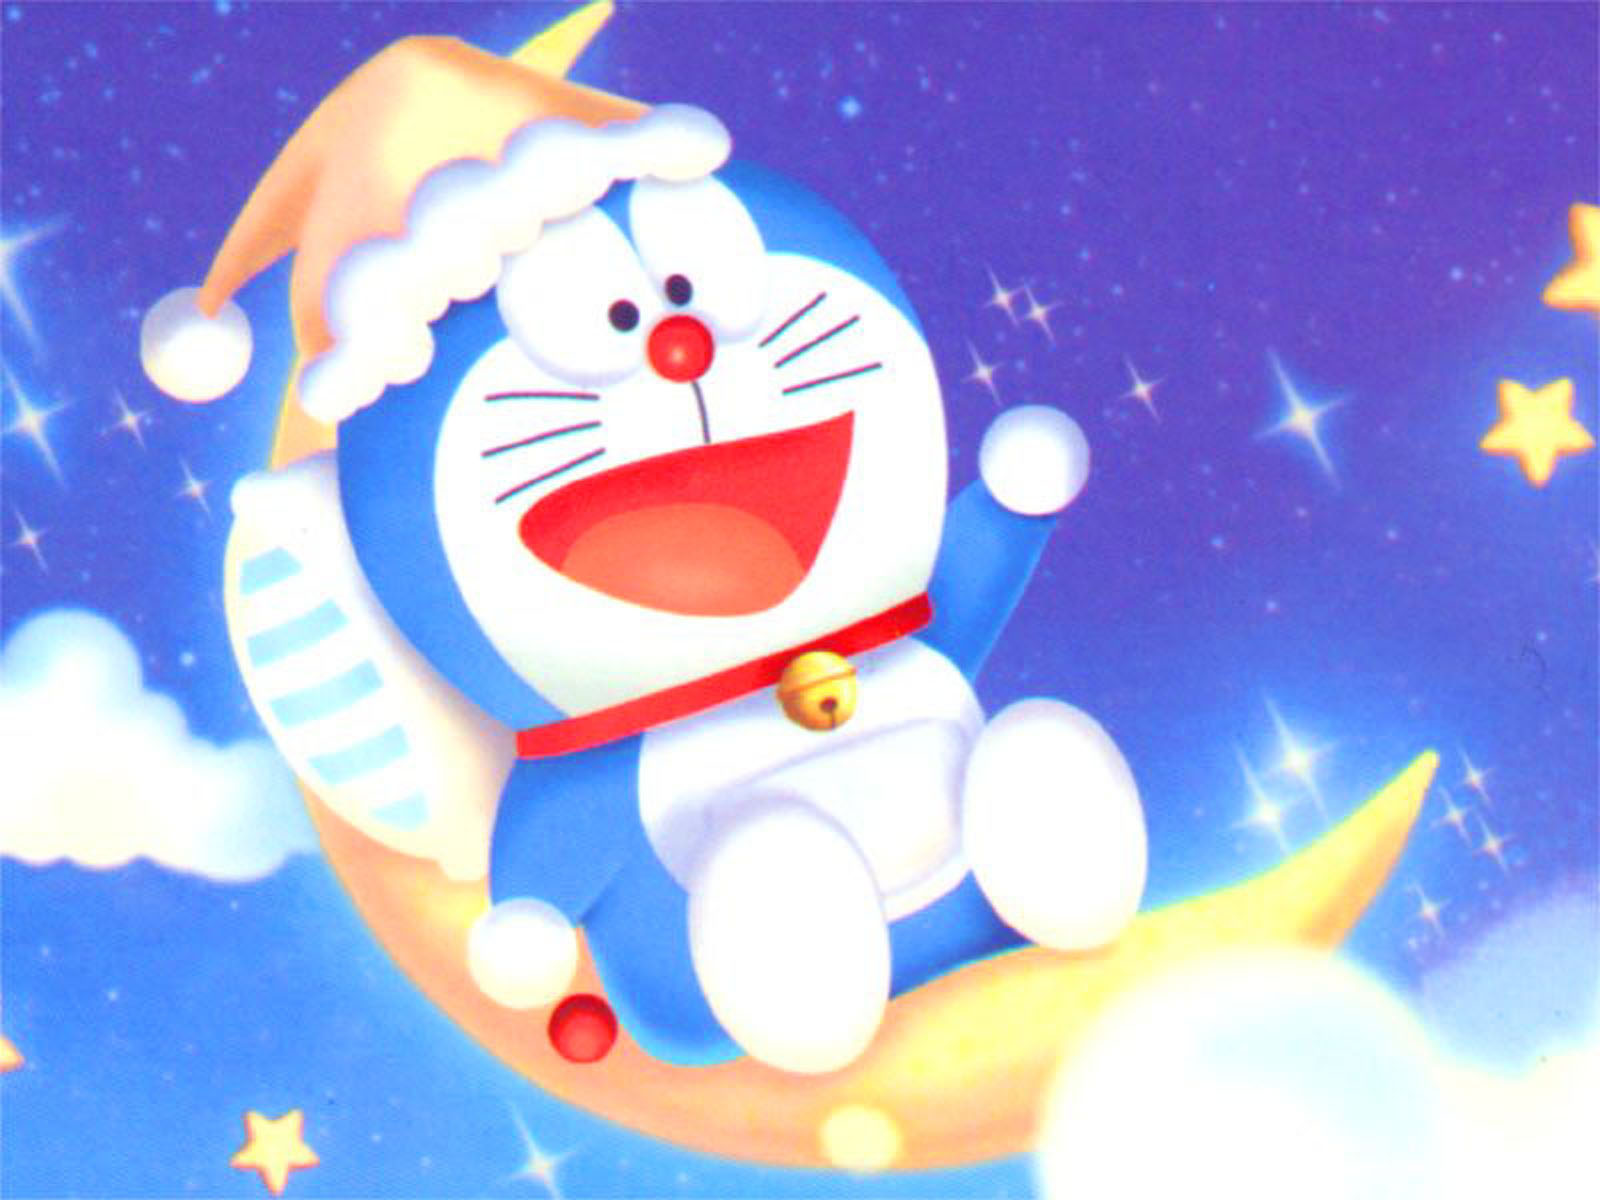 1000 Gambar Dp Bbm Doraemon Lucu Bergerak Gambar Kata Kata